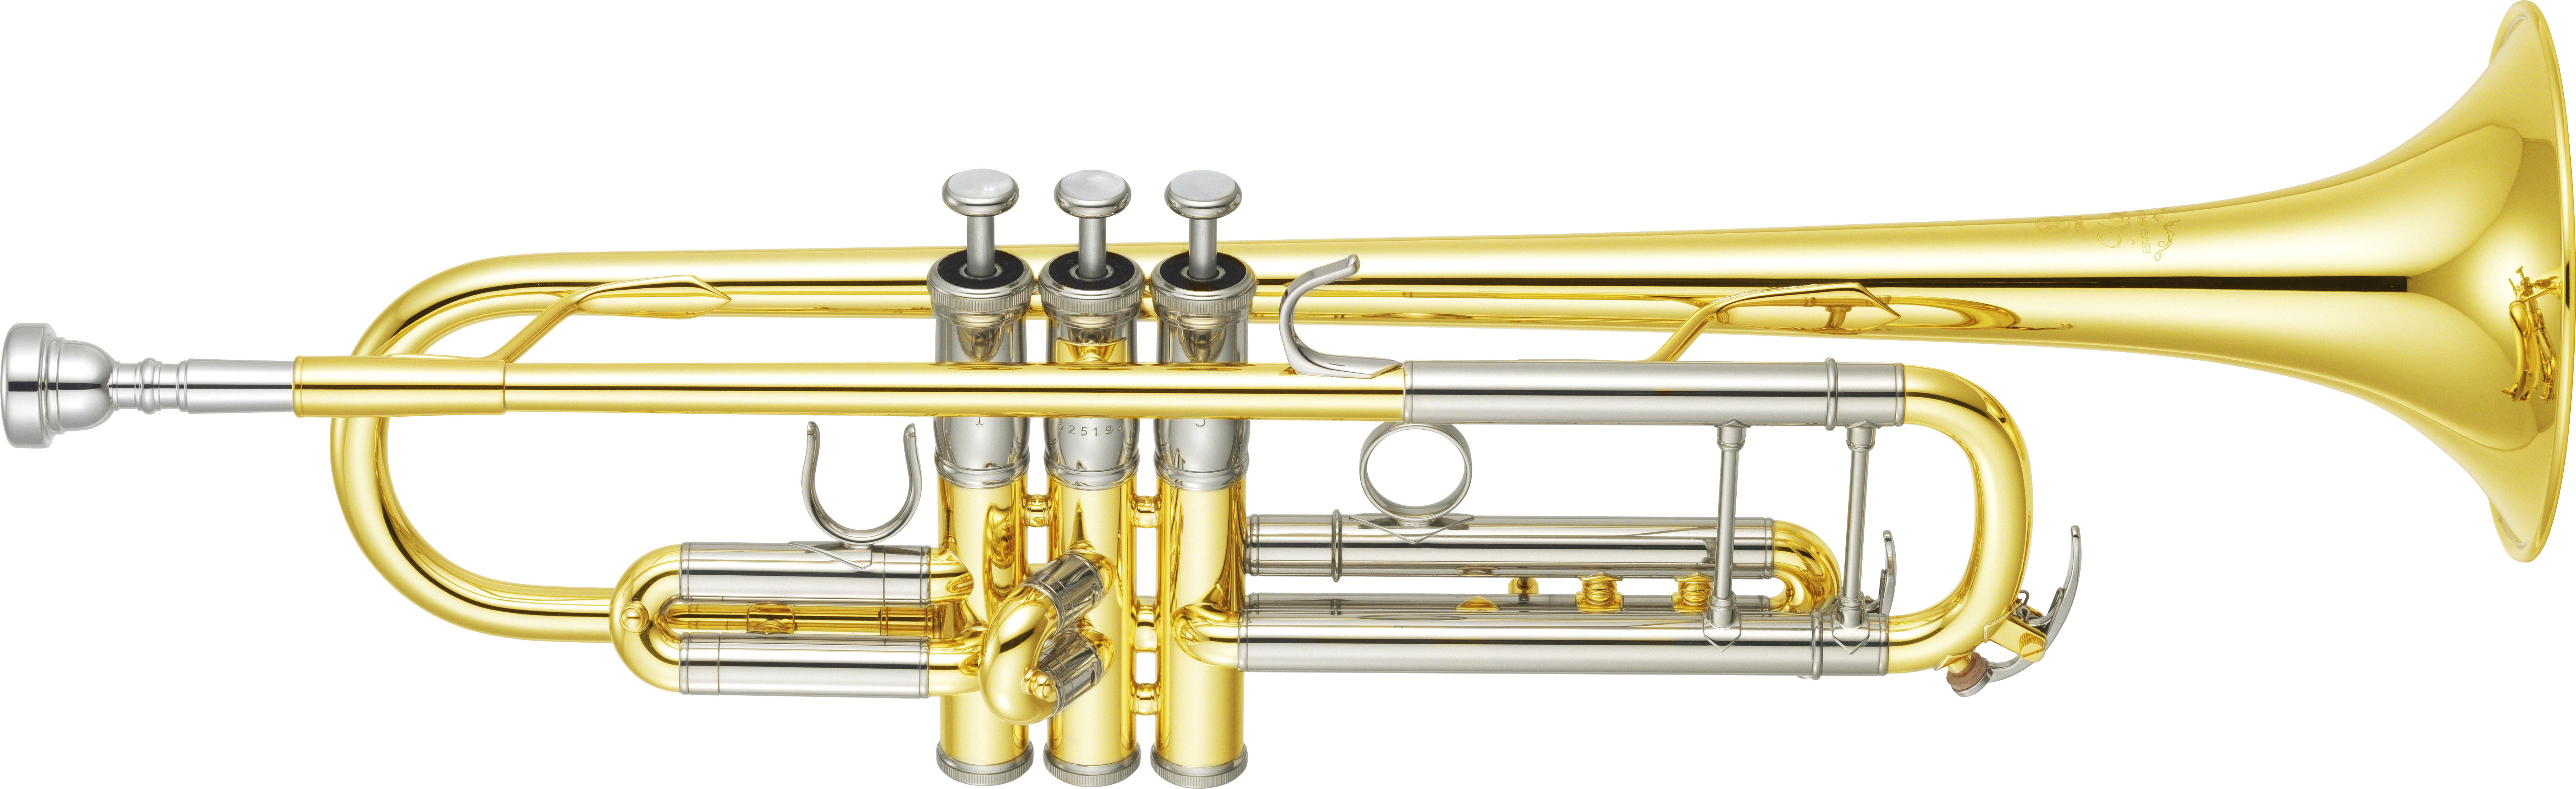 Yamaha Bb Trumpet - YTR 8335 04